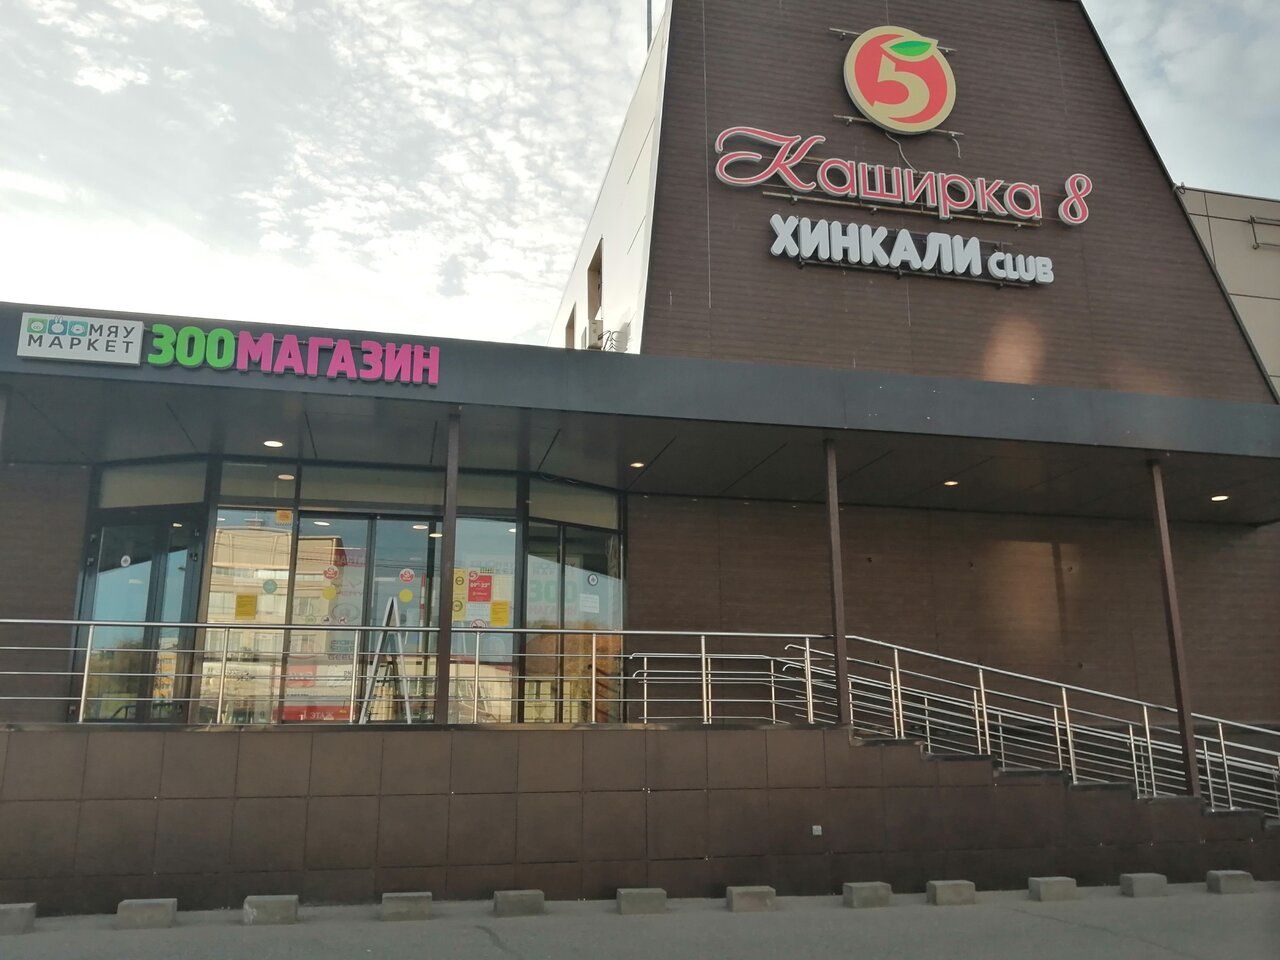 Торговом центре Каширка 8